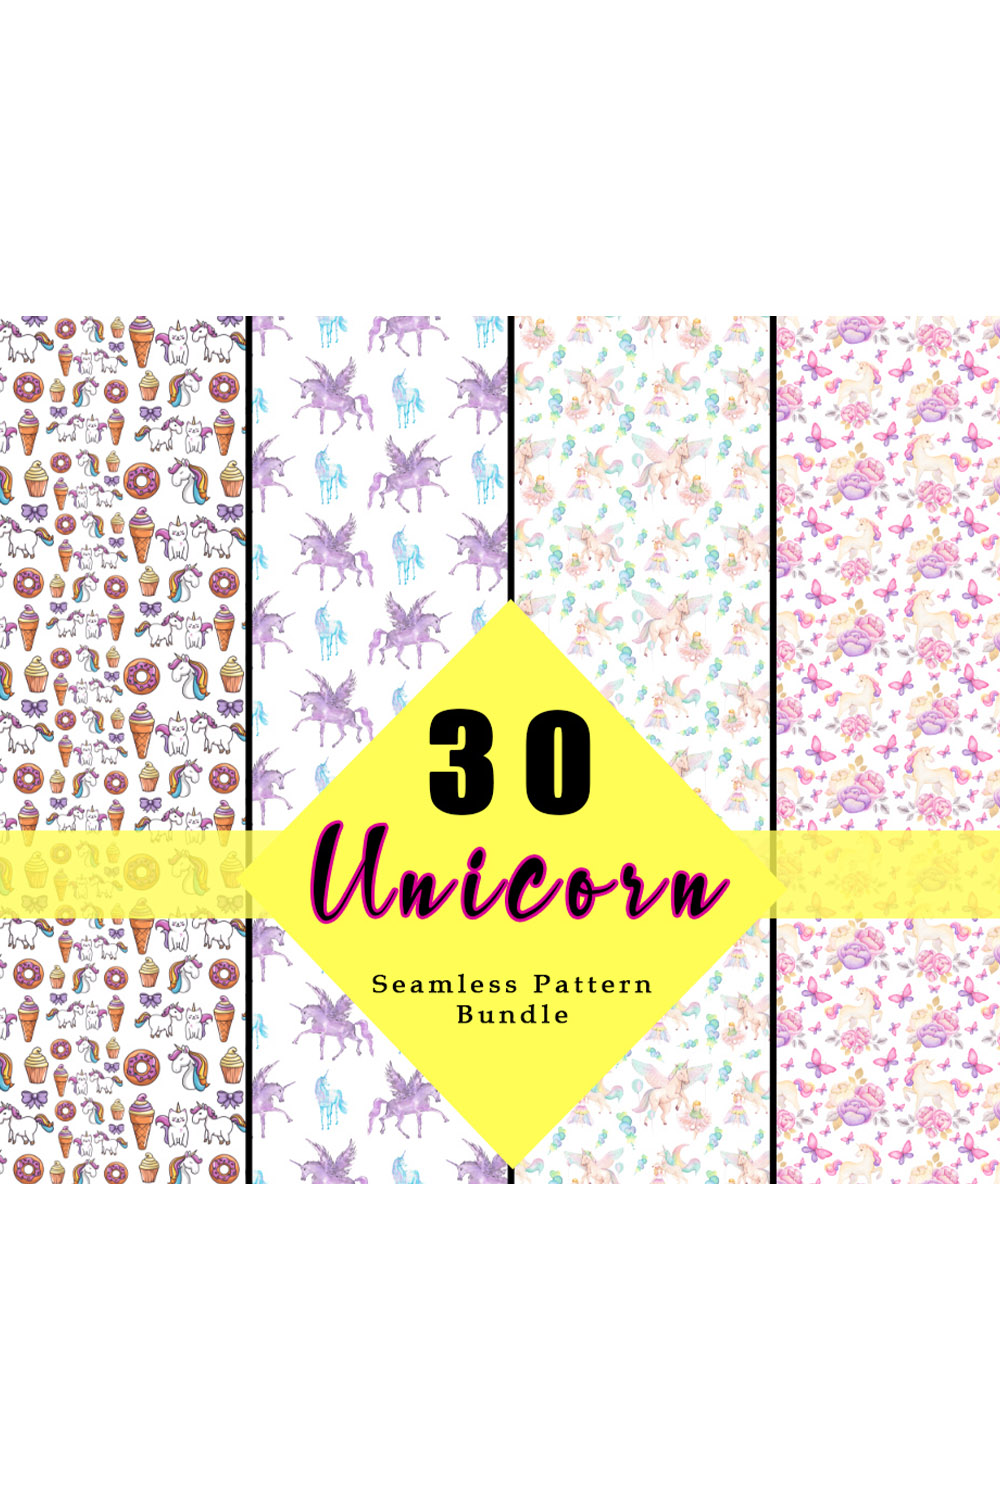 Set of images of cartoon patterns with unicorns